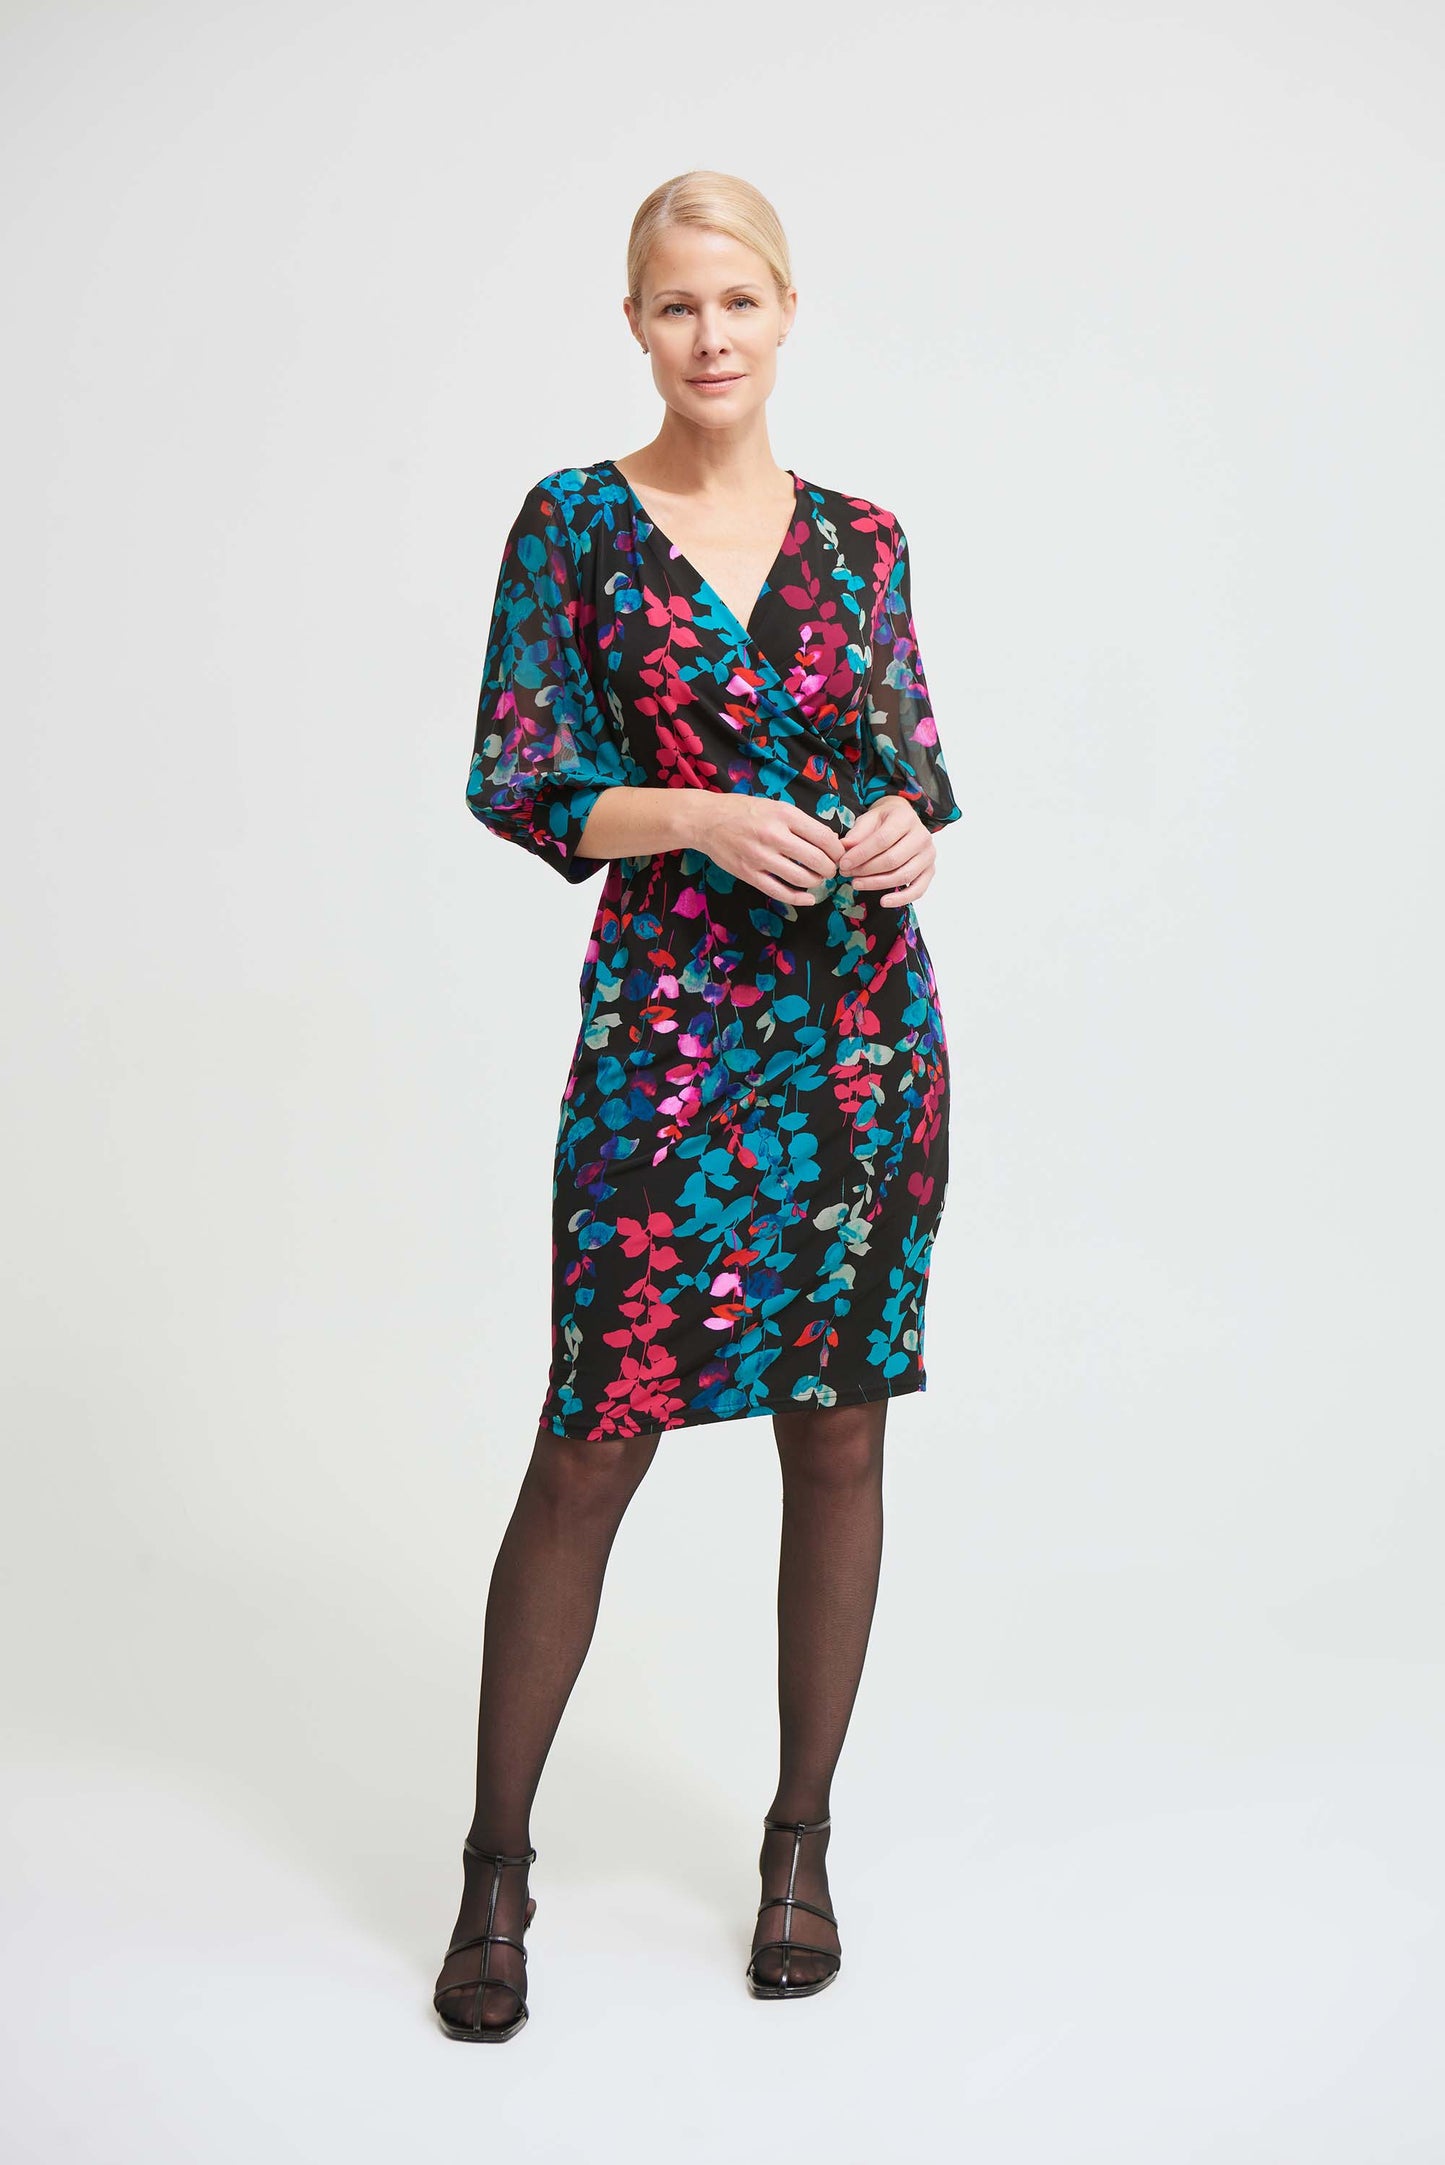 Joseph Ribkoff - Dress - Style 213414 - 50% Off